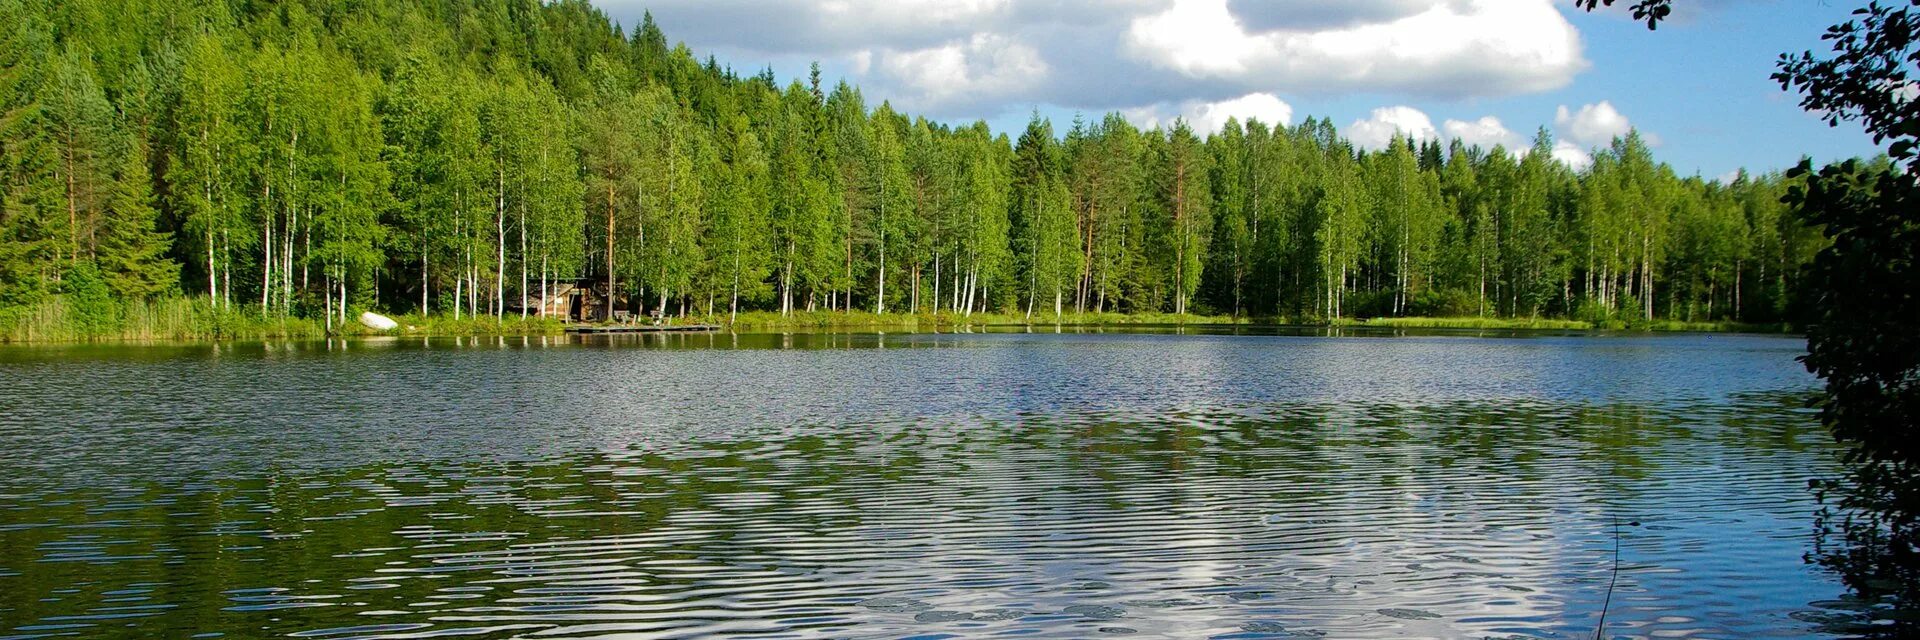 Финляндия тысяча озер. Финляндия Страна тысячи озер. Карелия 1000 озер. Финляндия Страна 1000 озер.